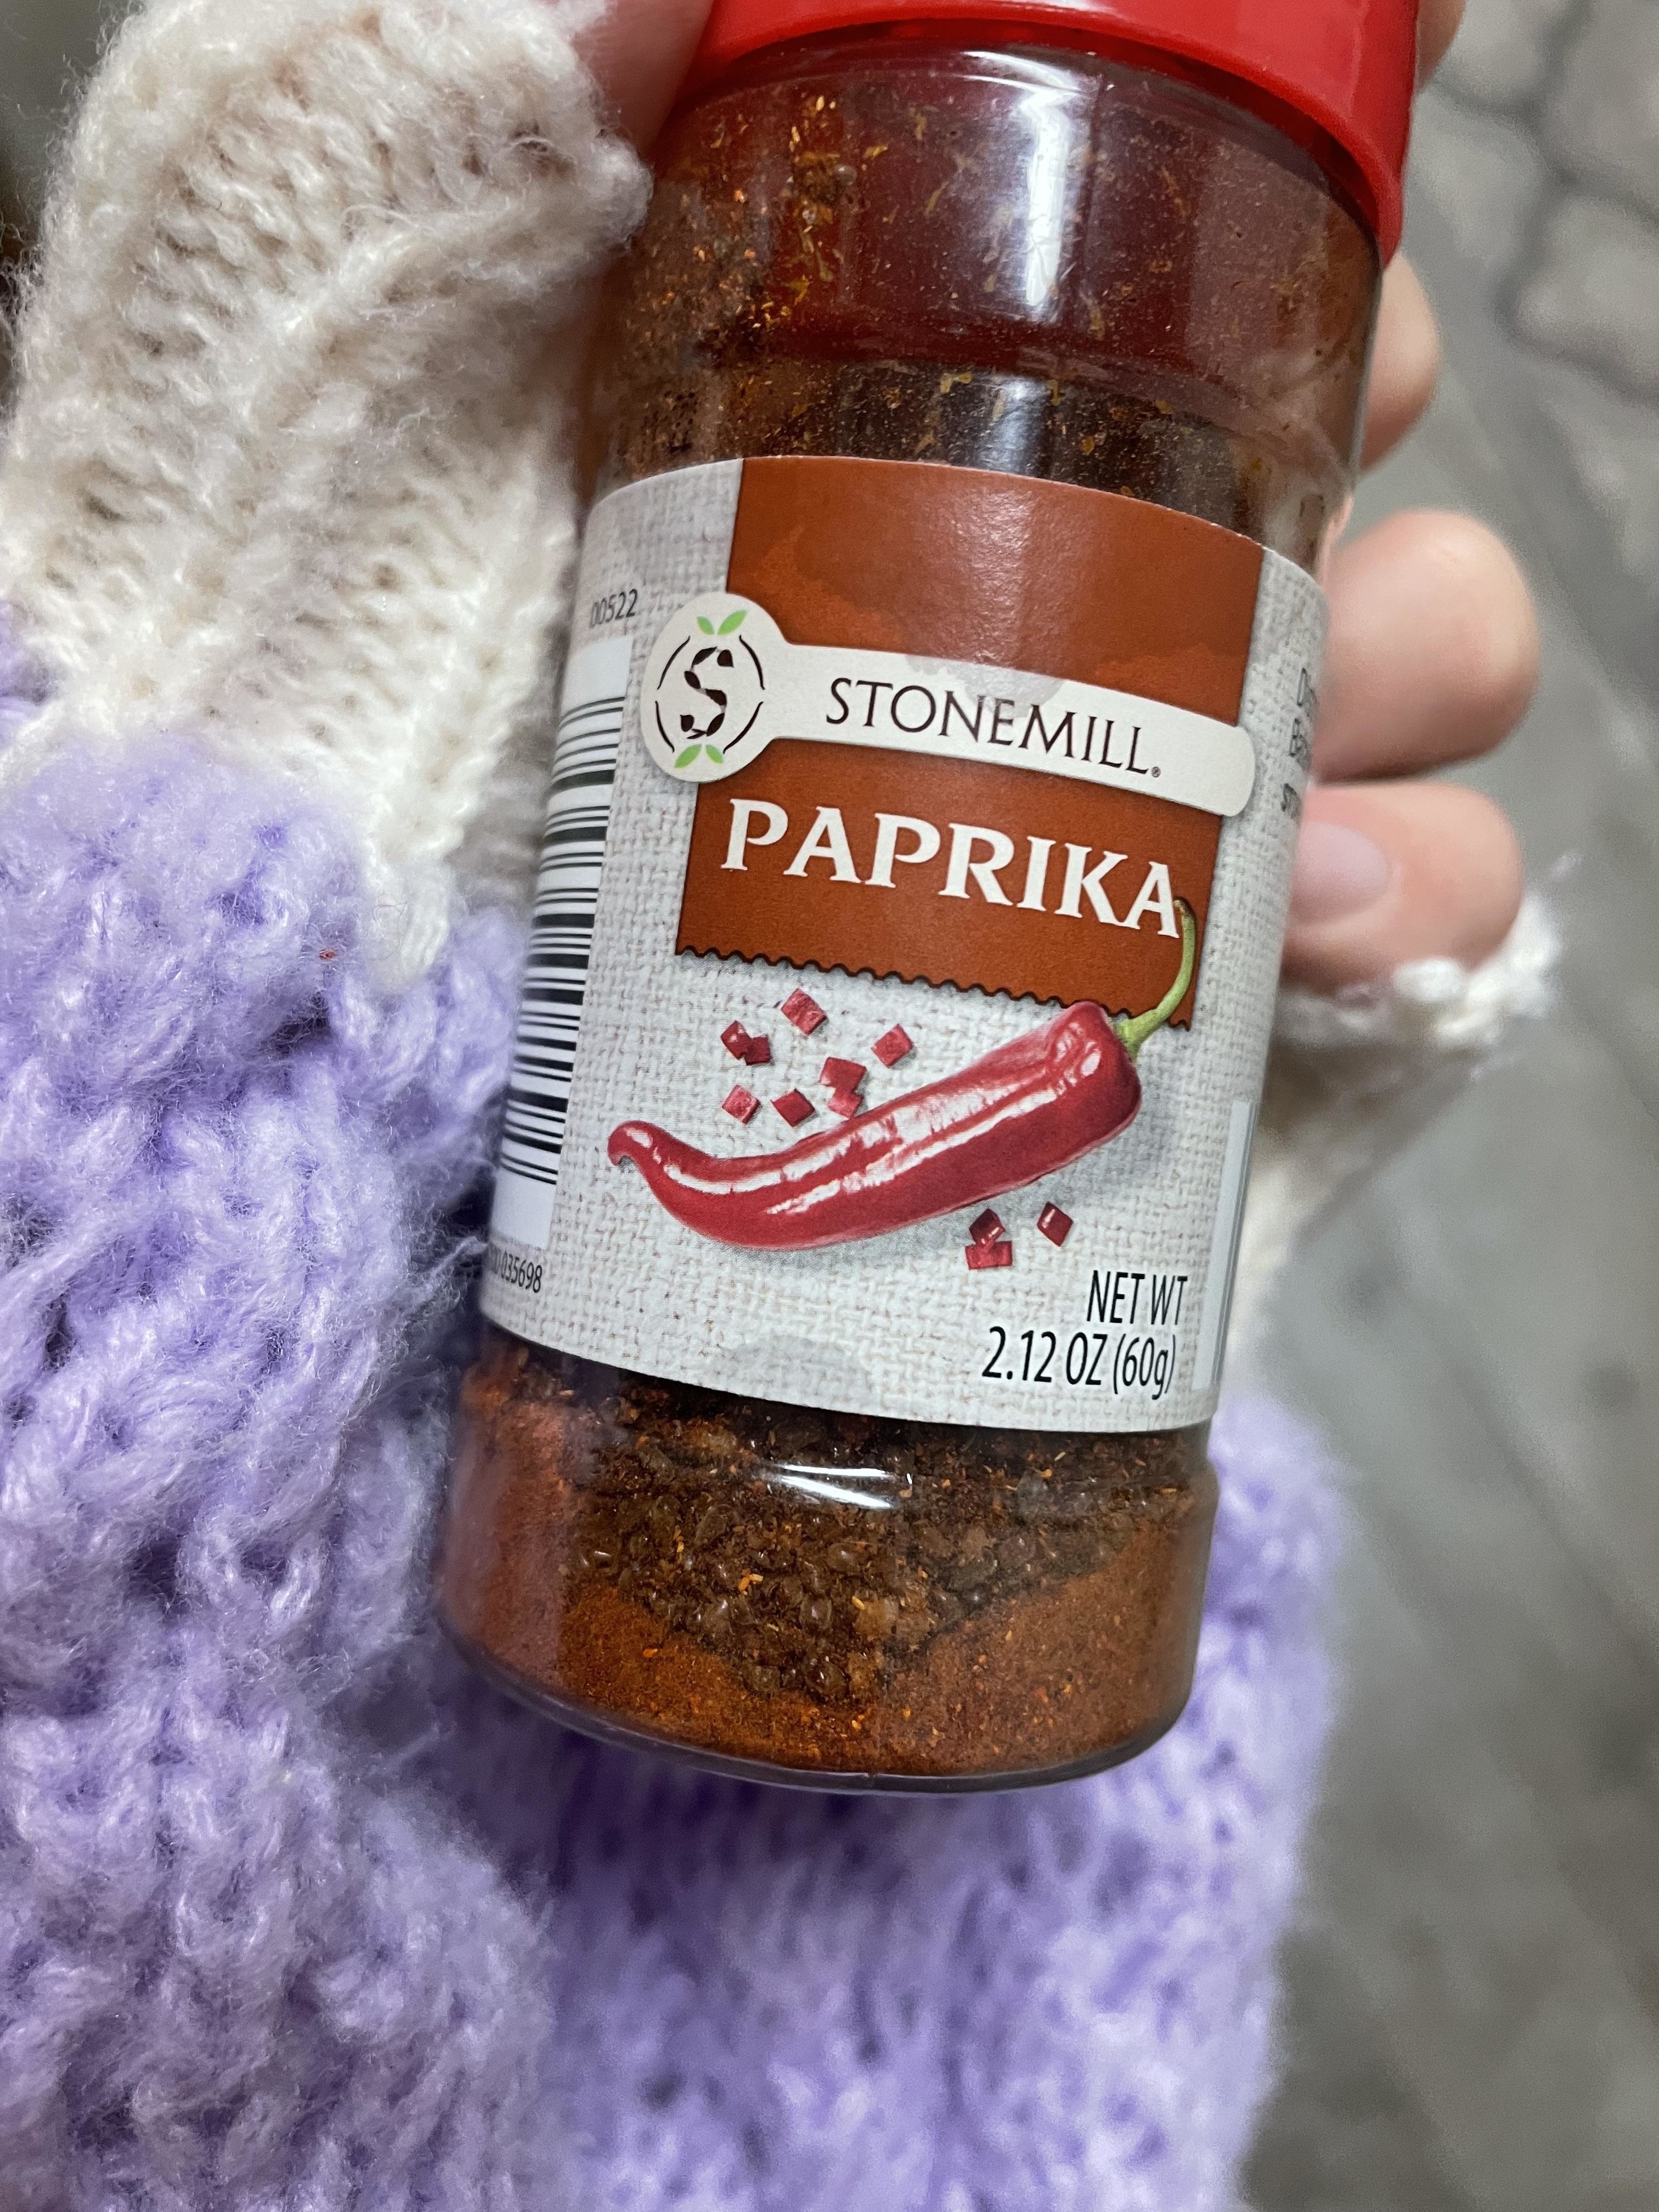 Hand holding a Stonemill Paprika spice jar